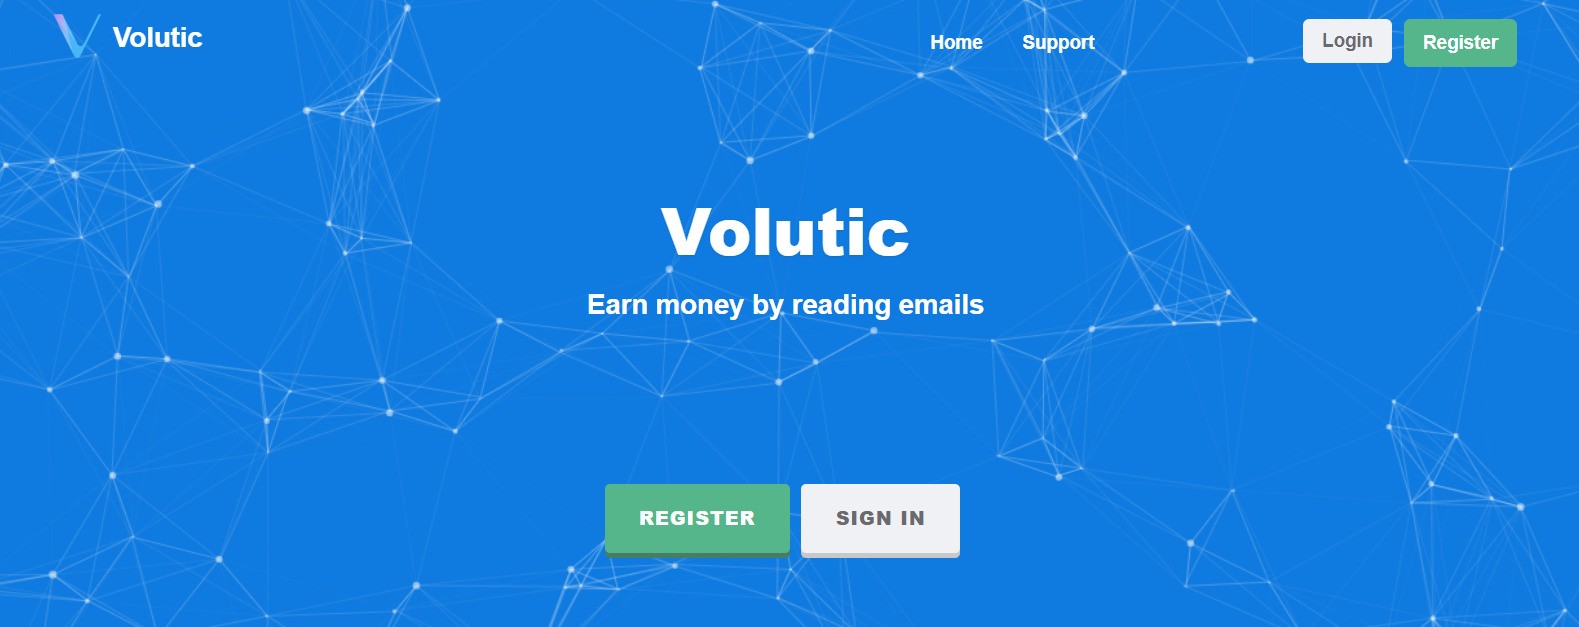 Сайт компании Volutic